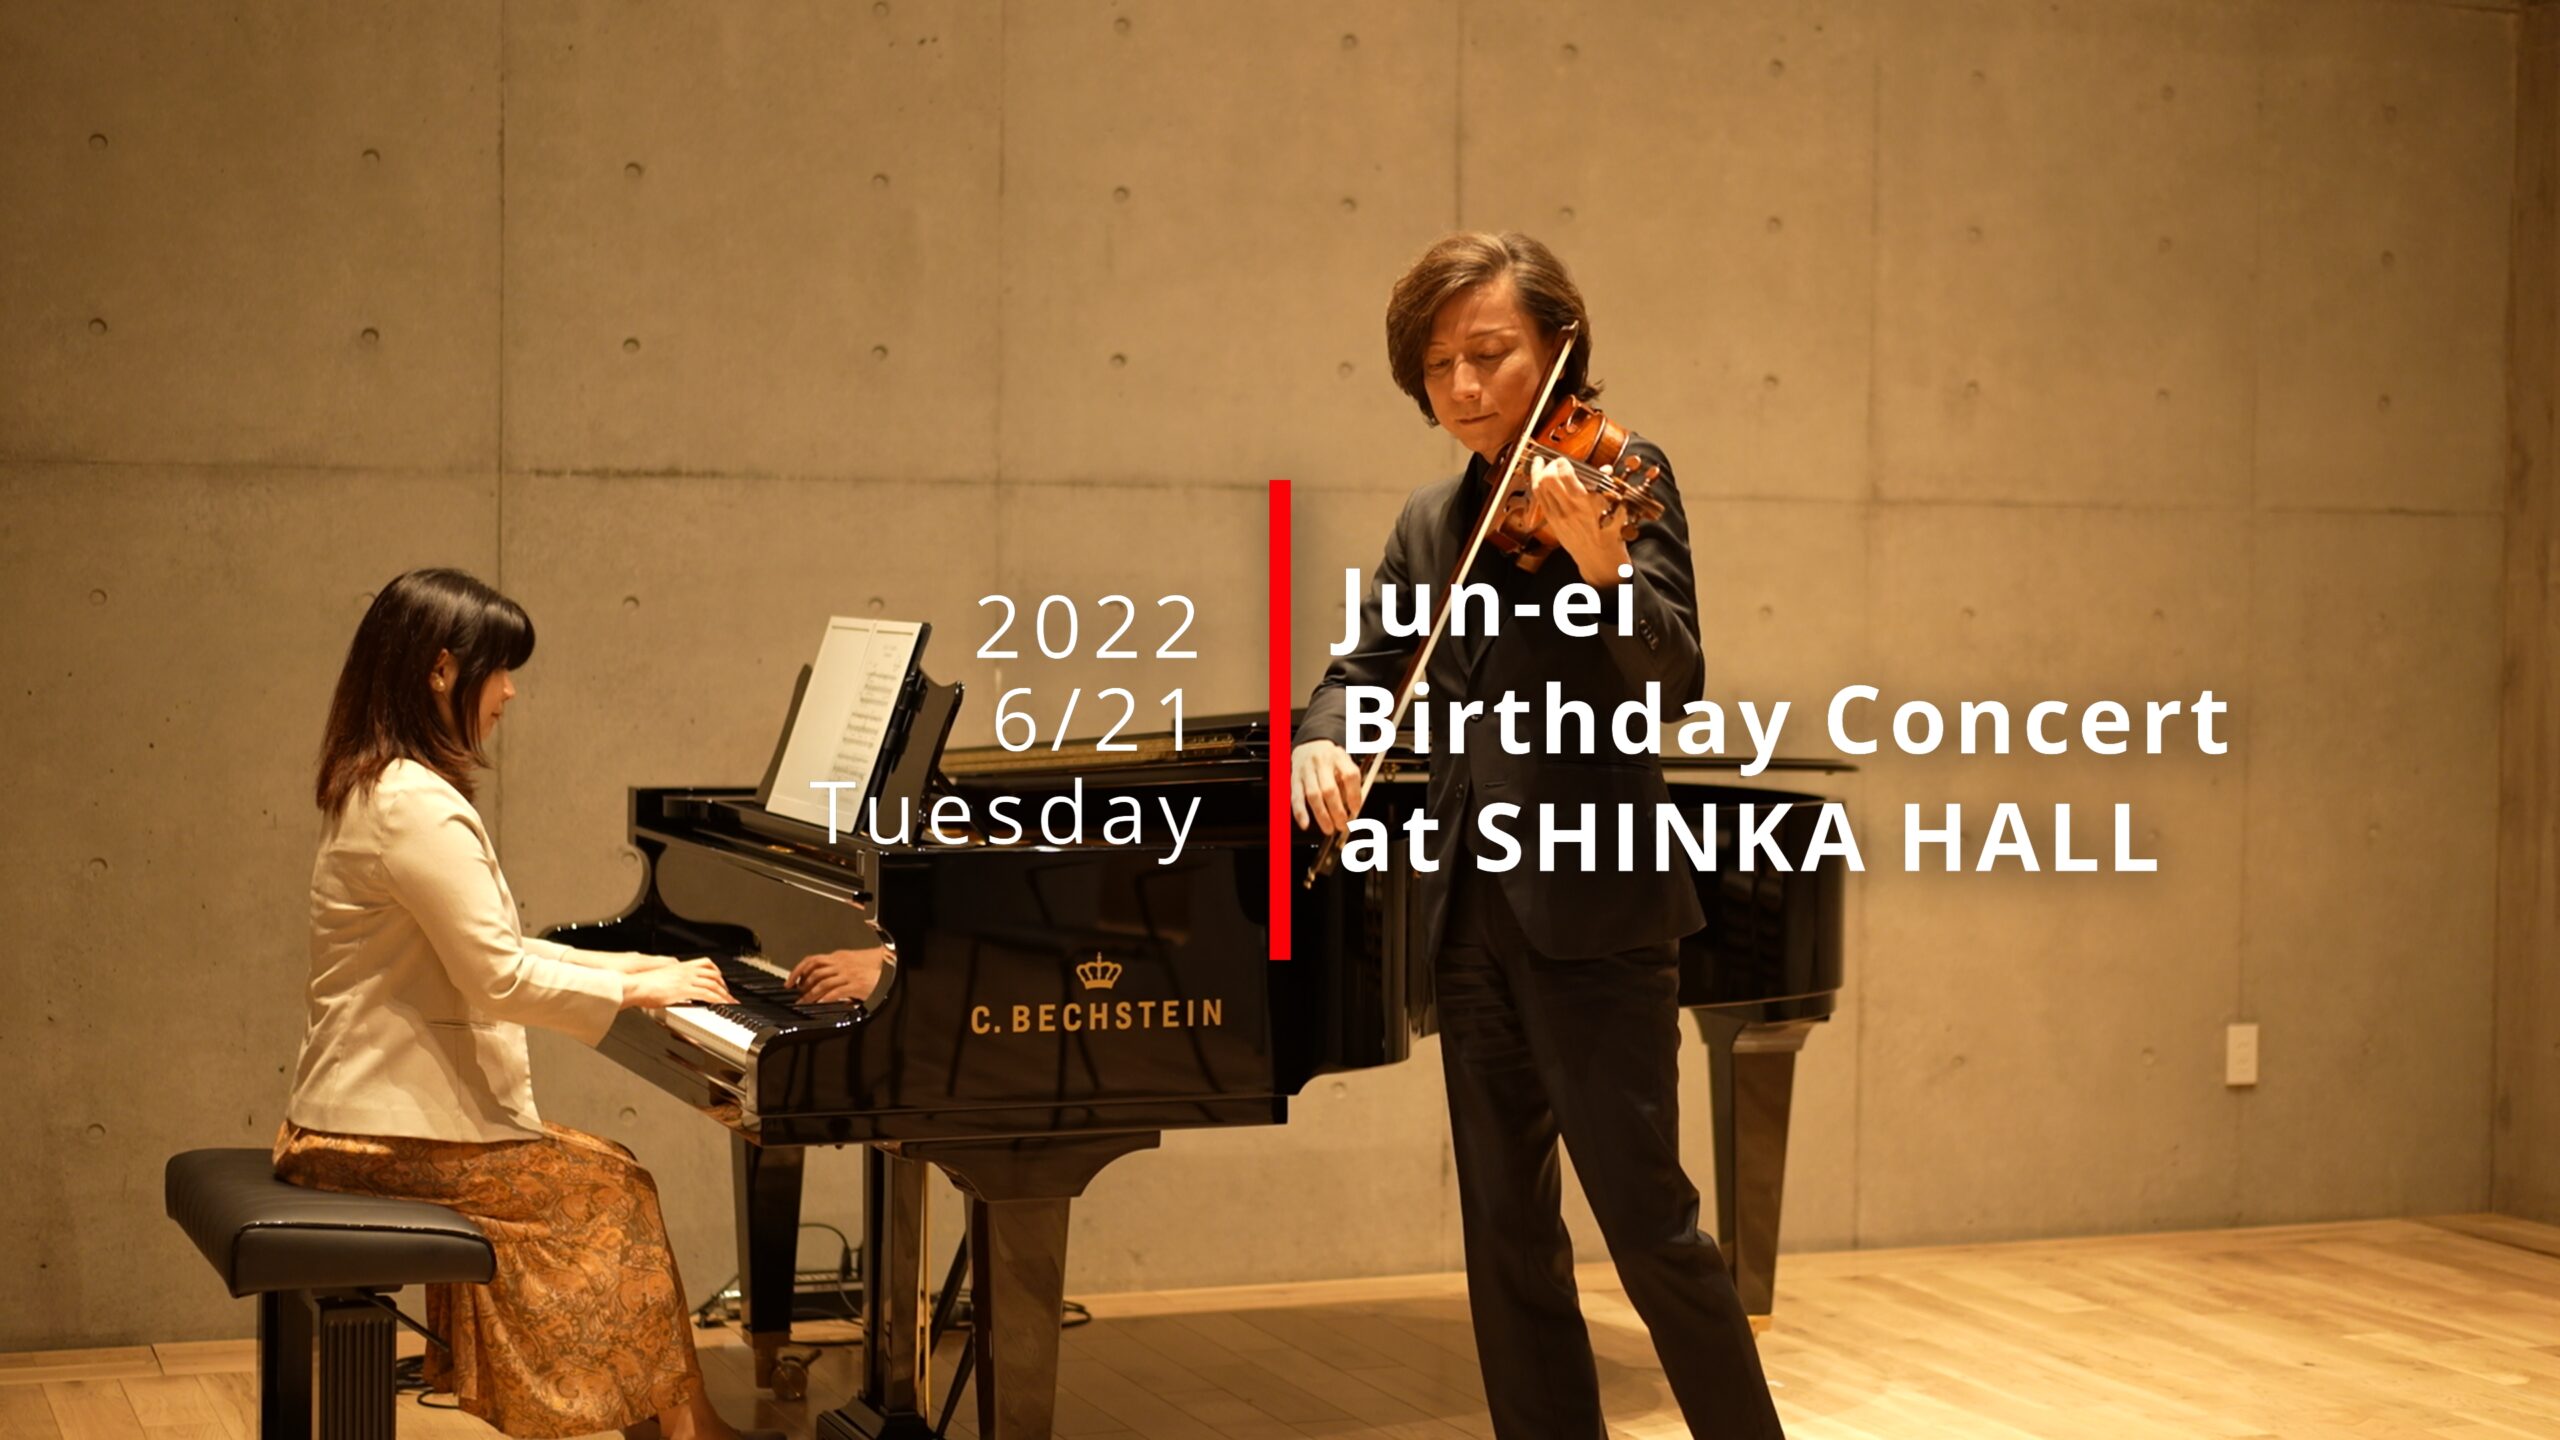 Jun-ei Birthday Concert